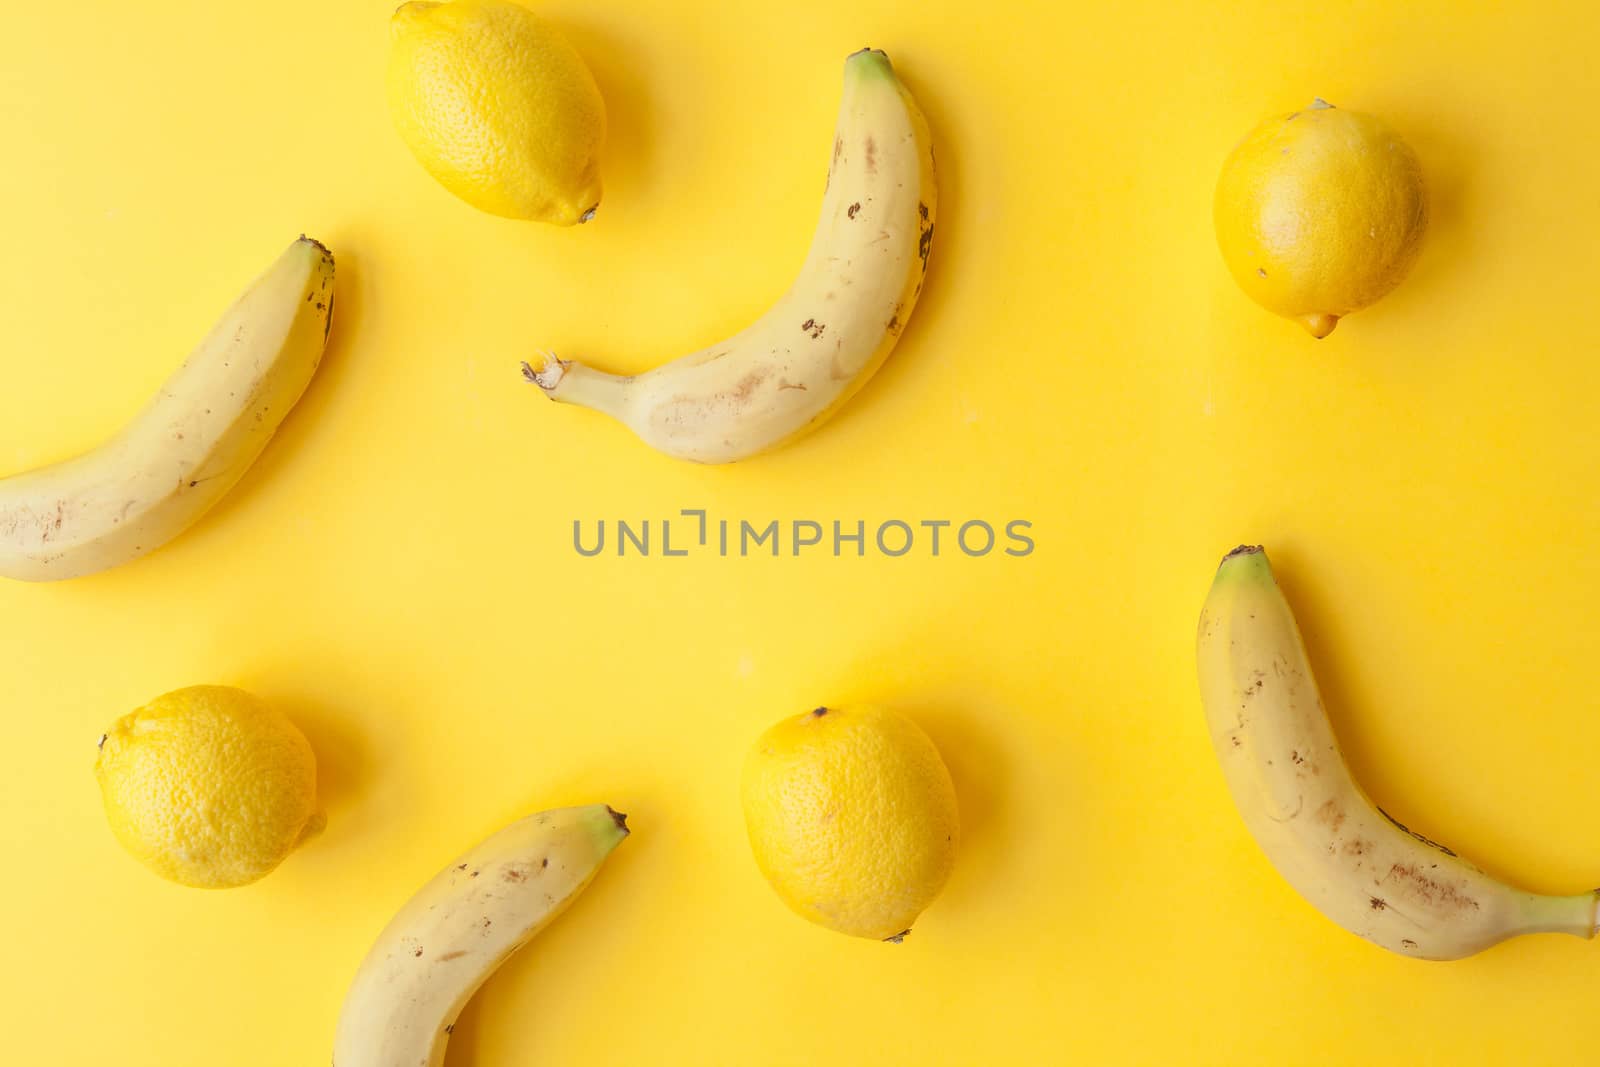 Bananas and lemons on yellow background by andongob